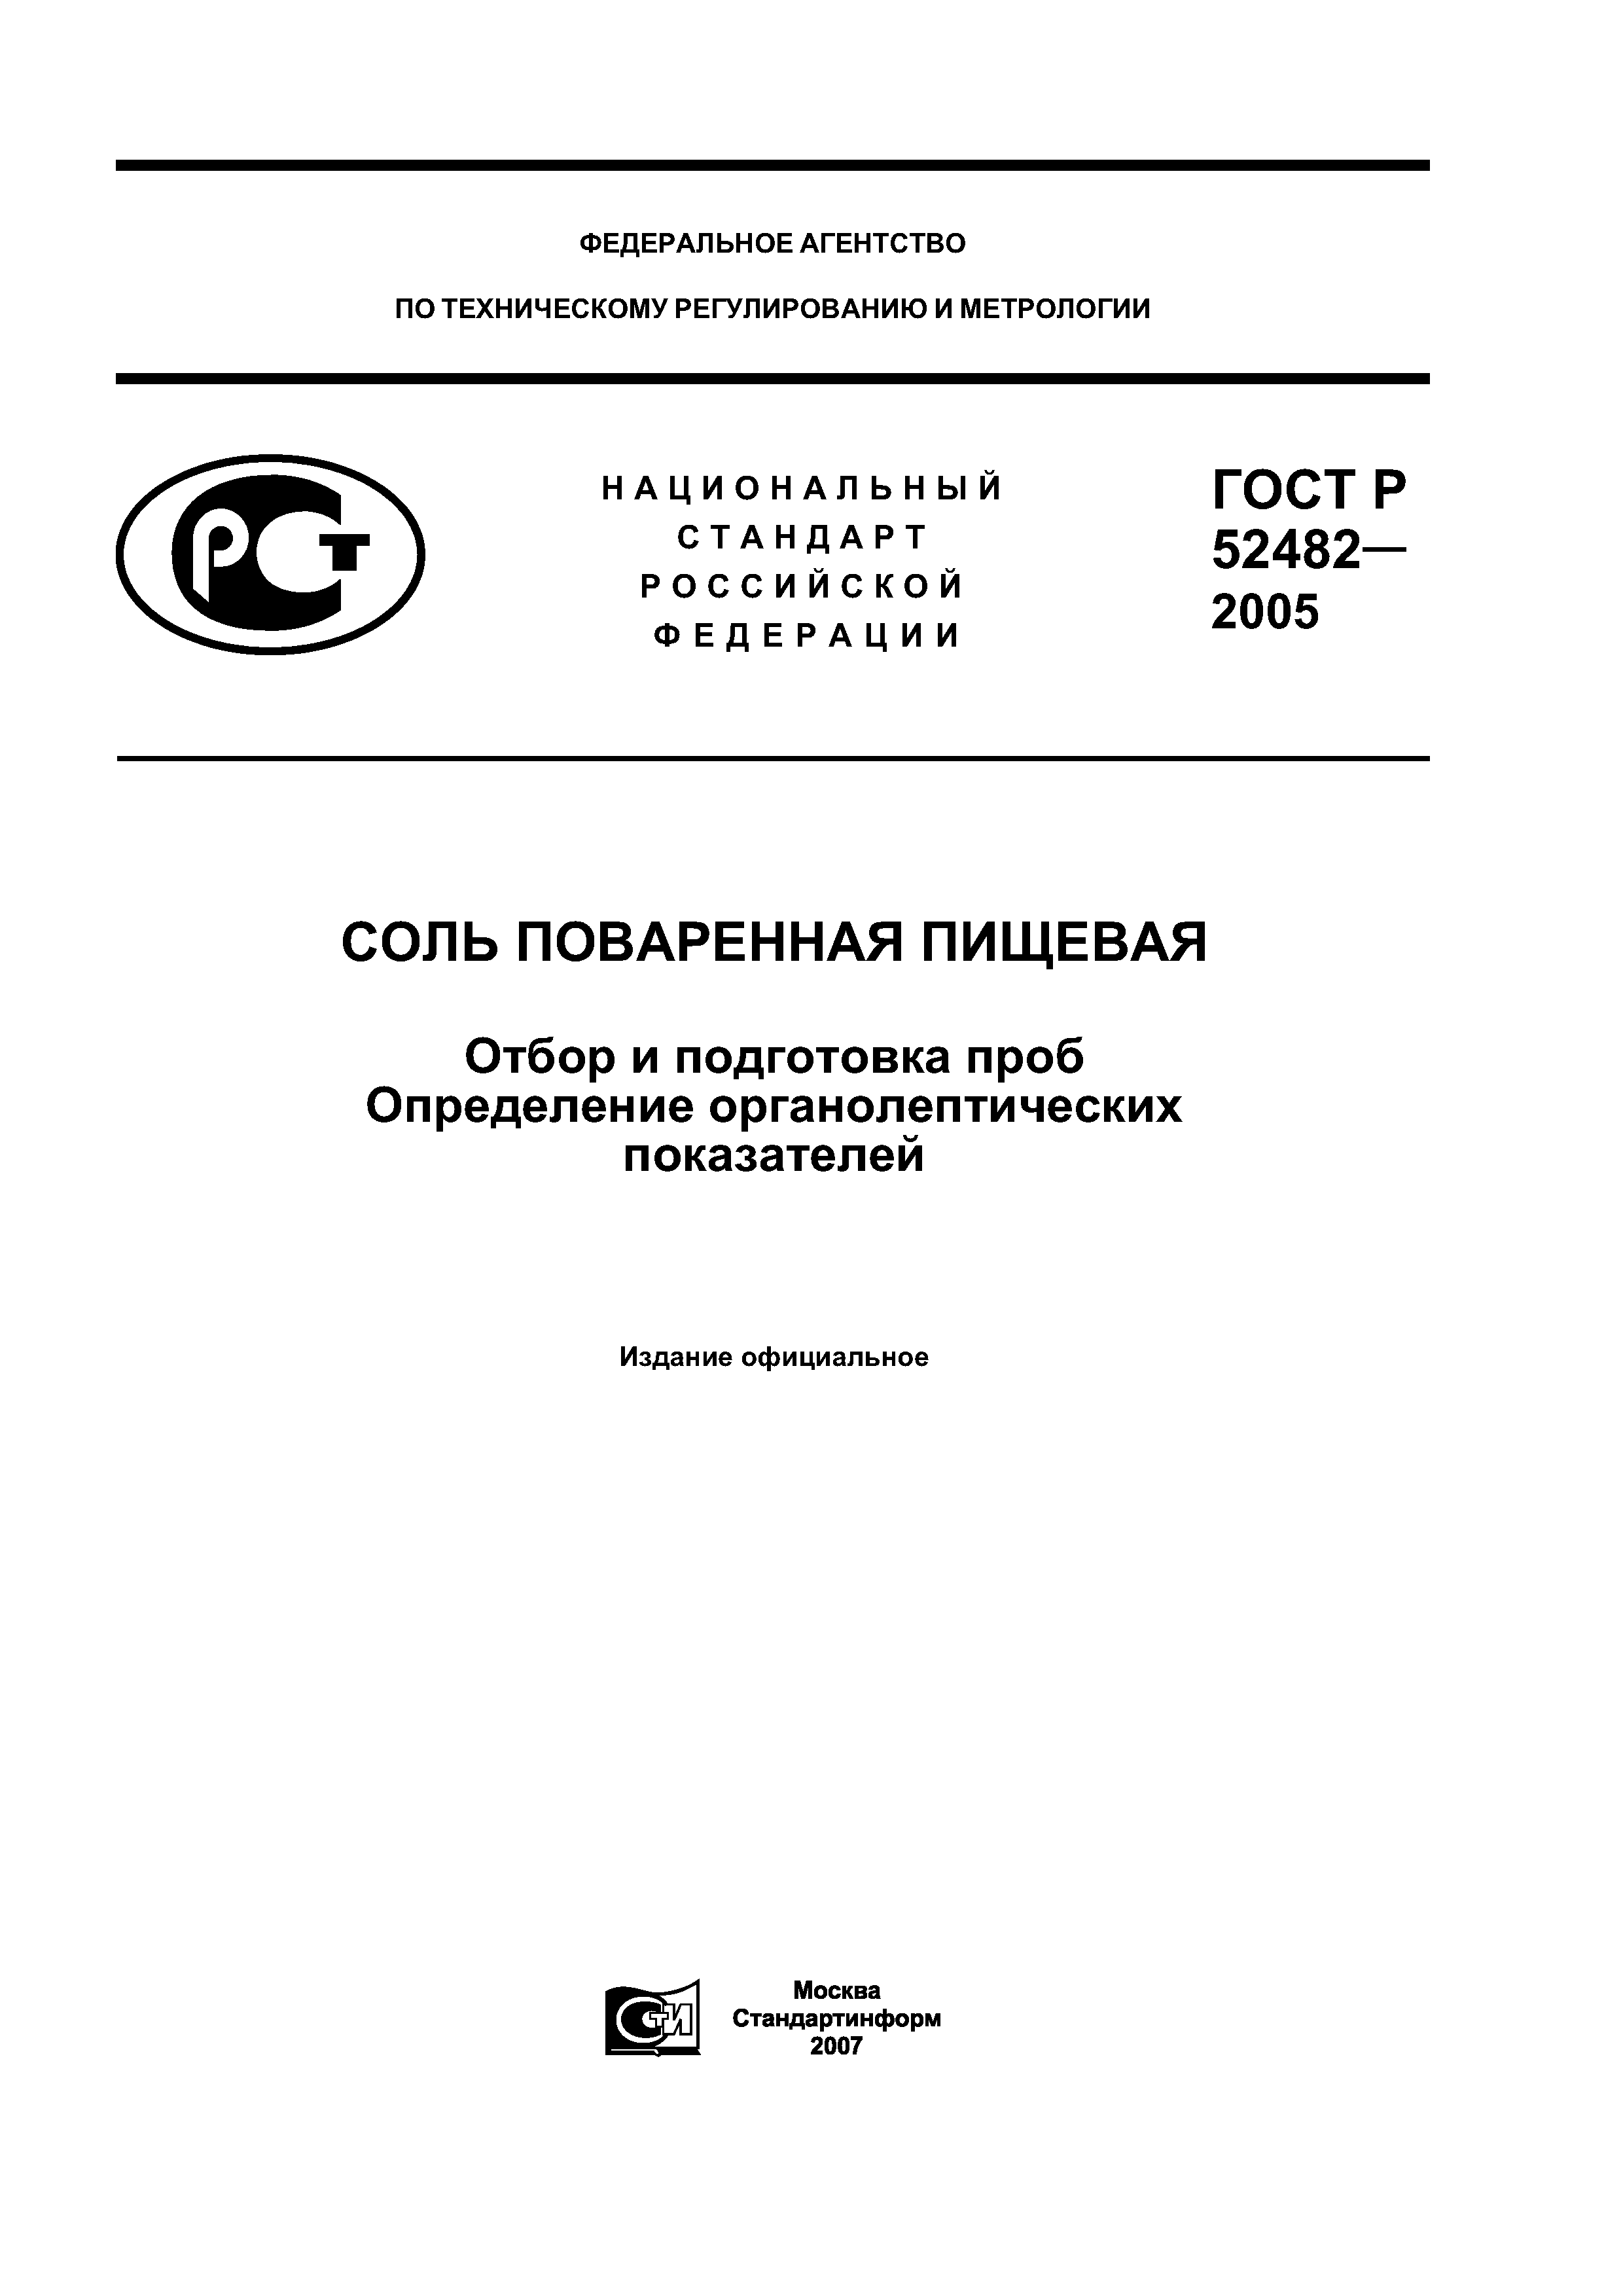 ГОСТ Р 52482-2005